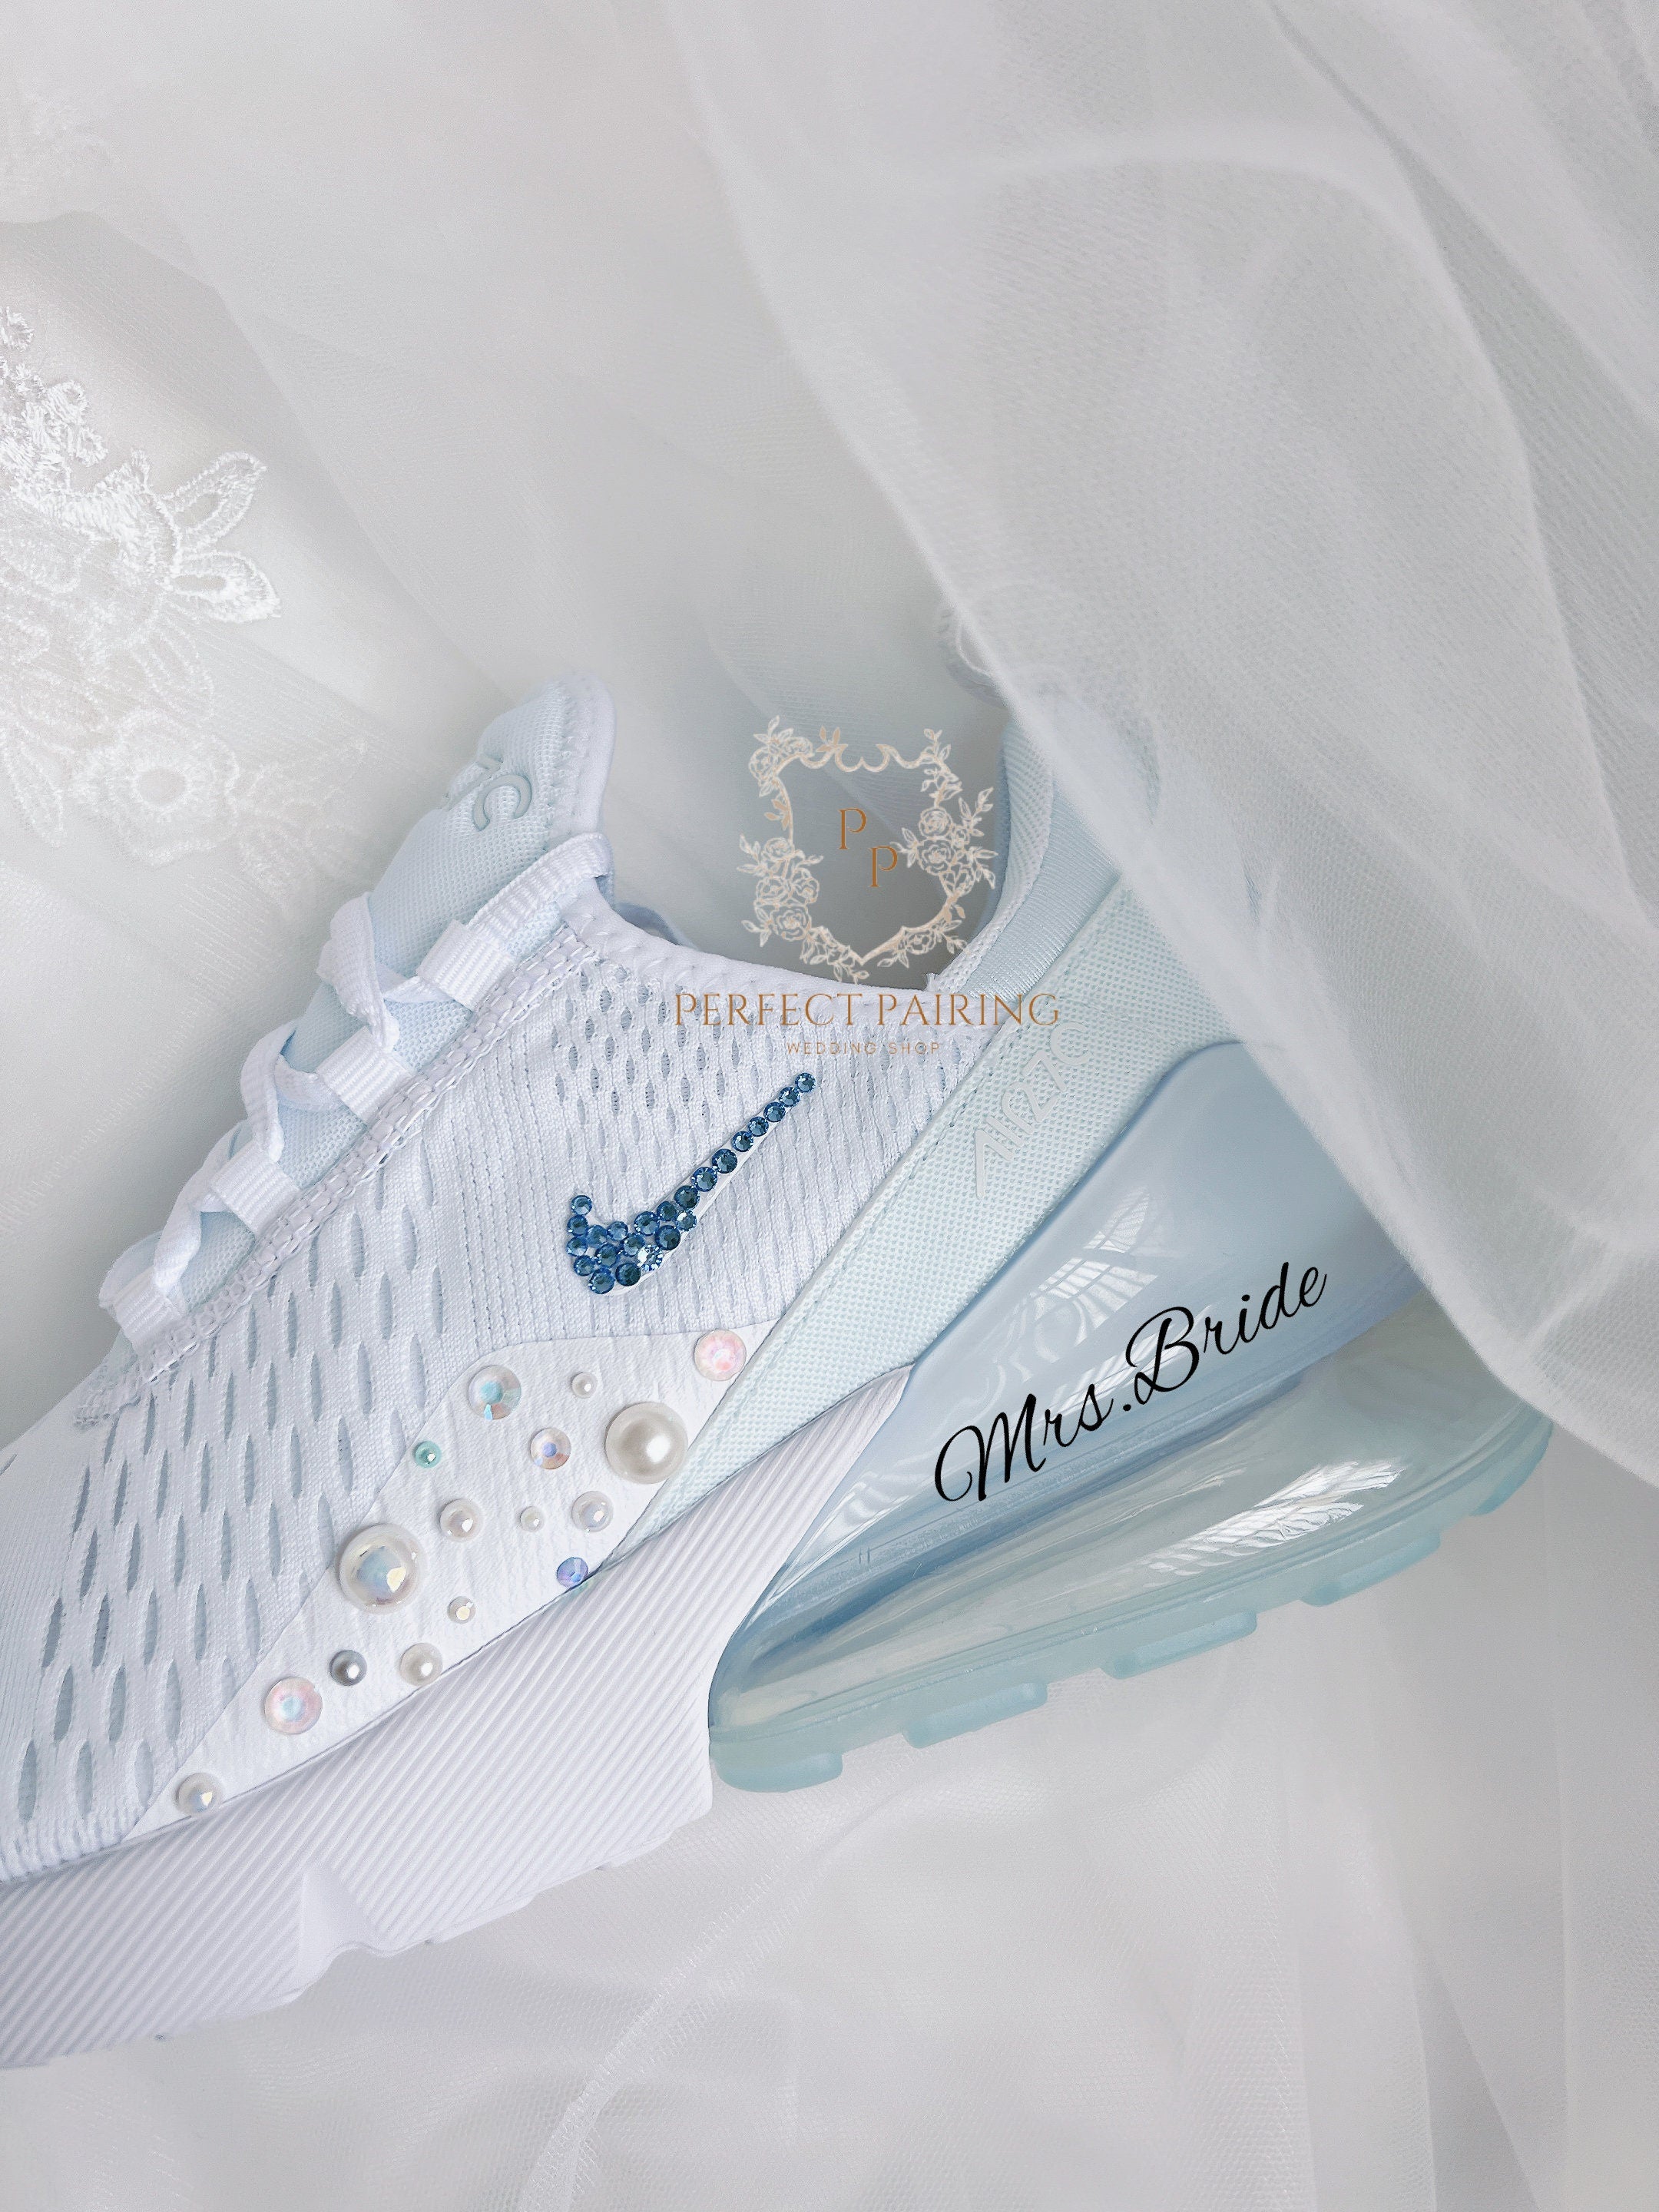 Wedding Shoes Custom Nike Air Max 270 Blue Rhinestones And Pearls